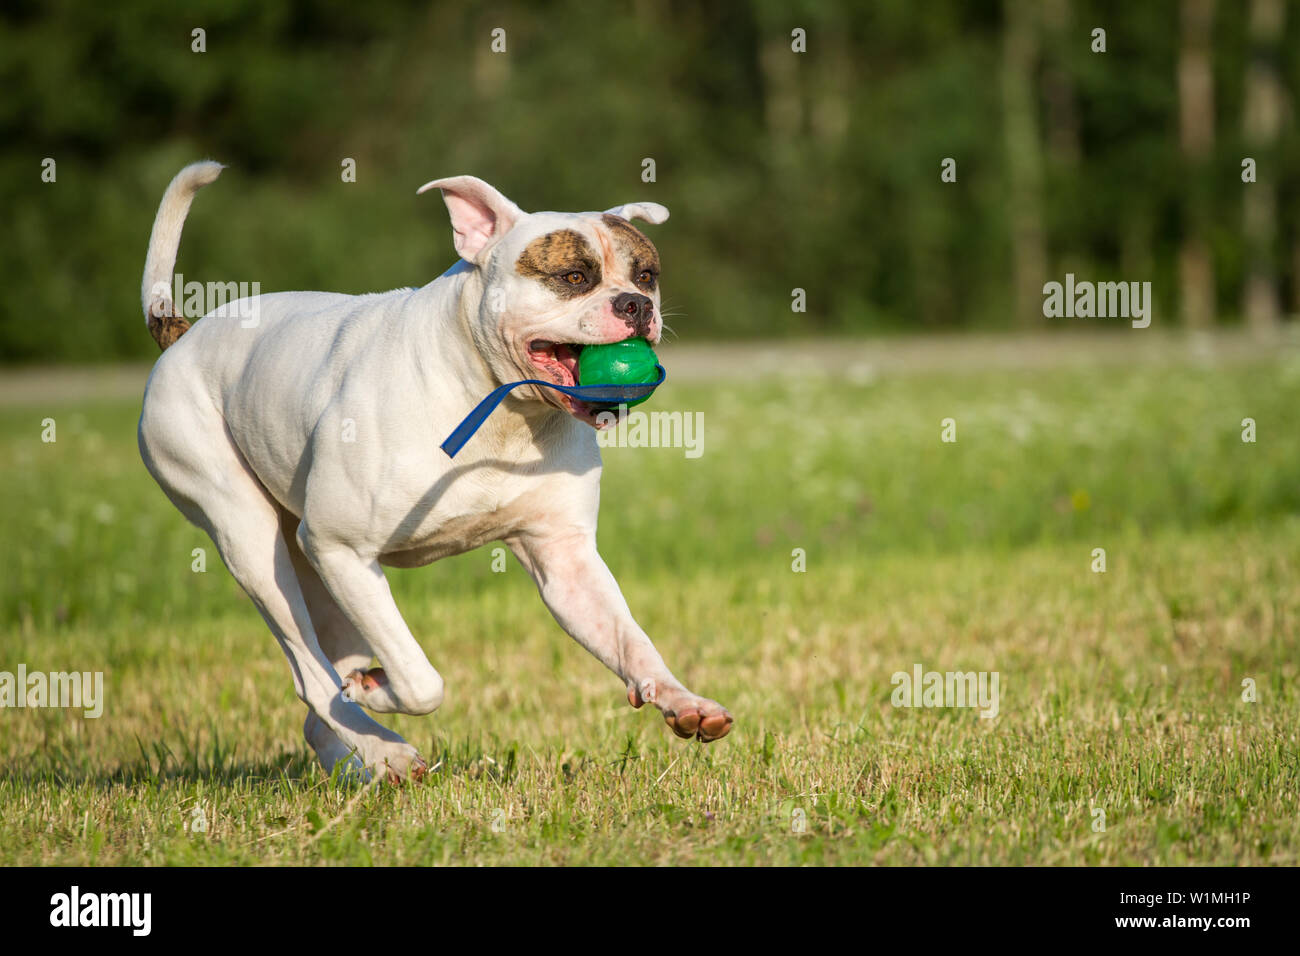 American Bulldog running and fetching a ball Stock Photo